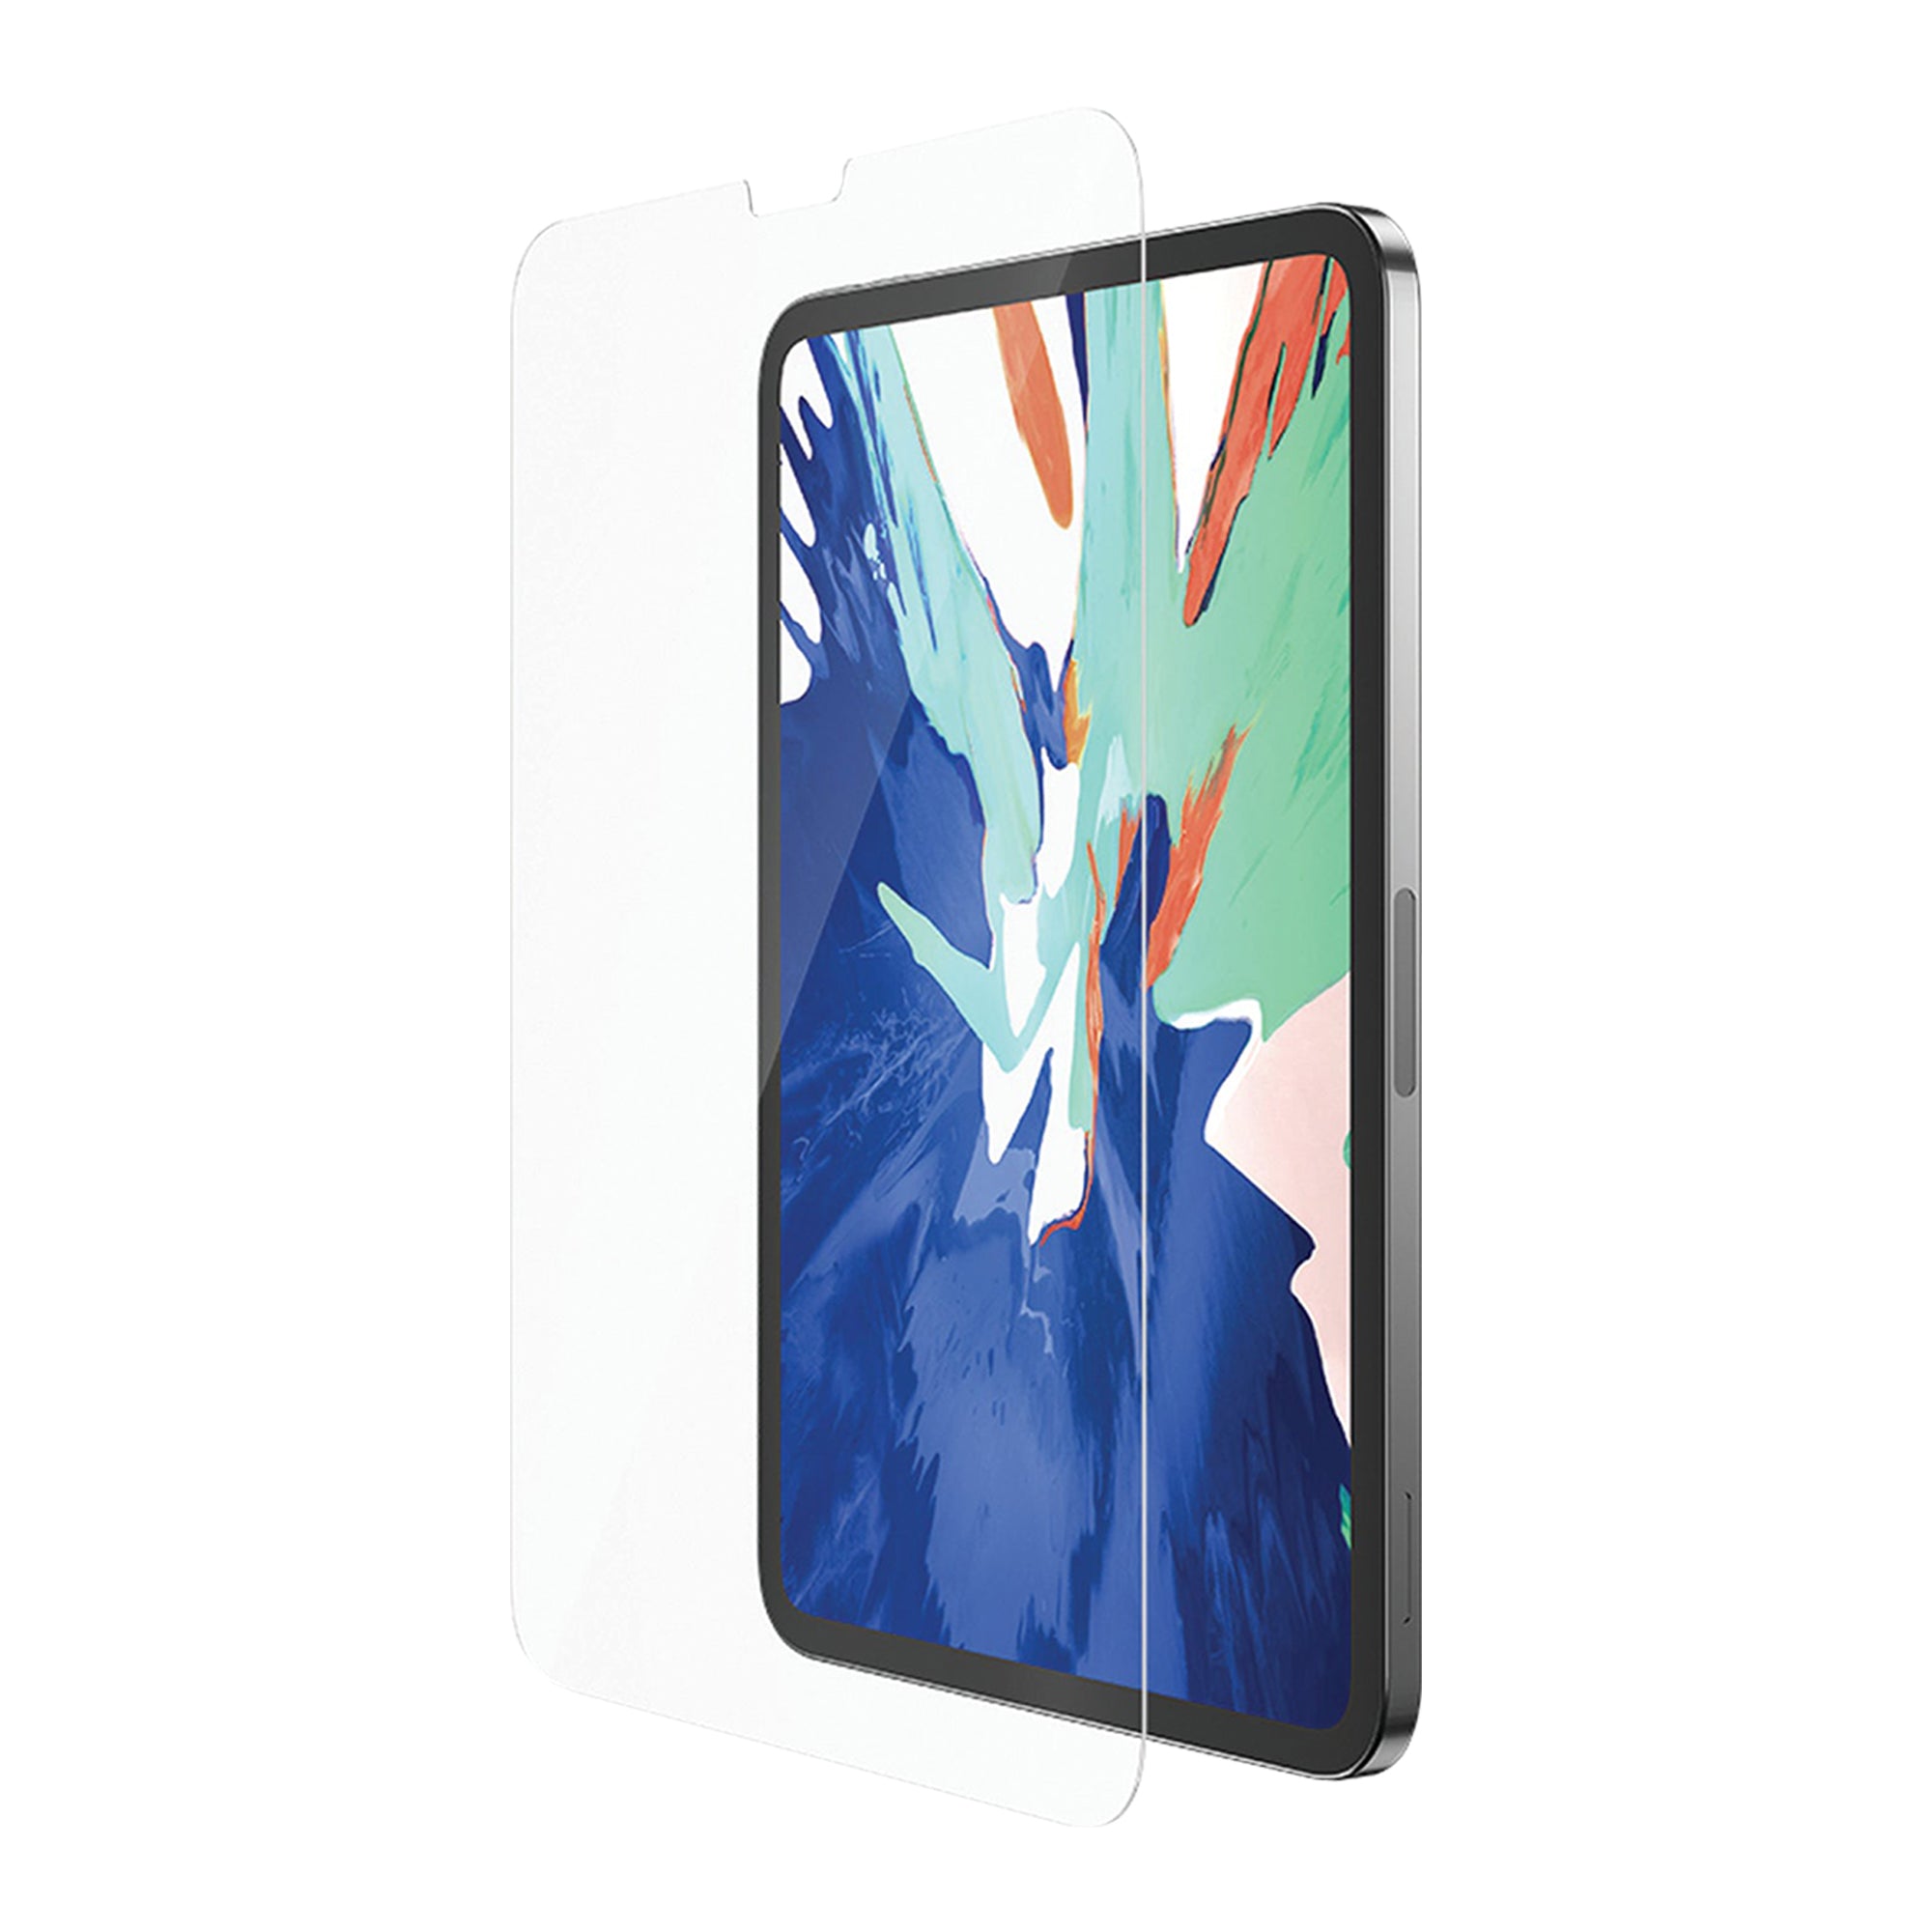 Amazingthing Tempered Glass Supreme for iPad